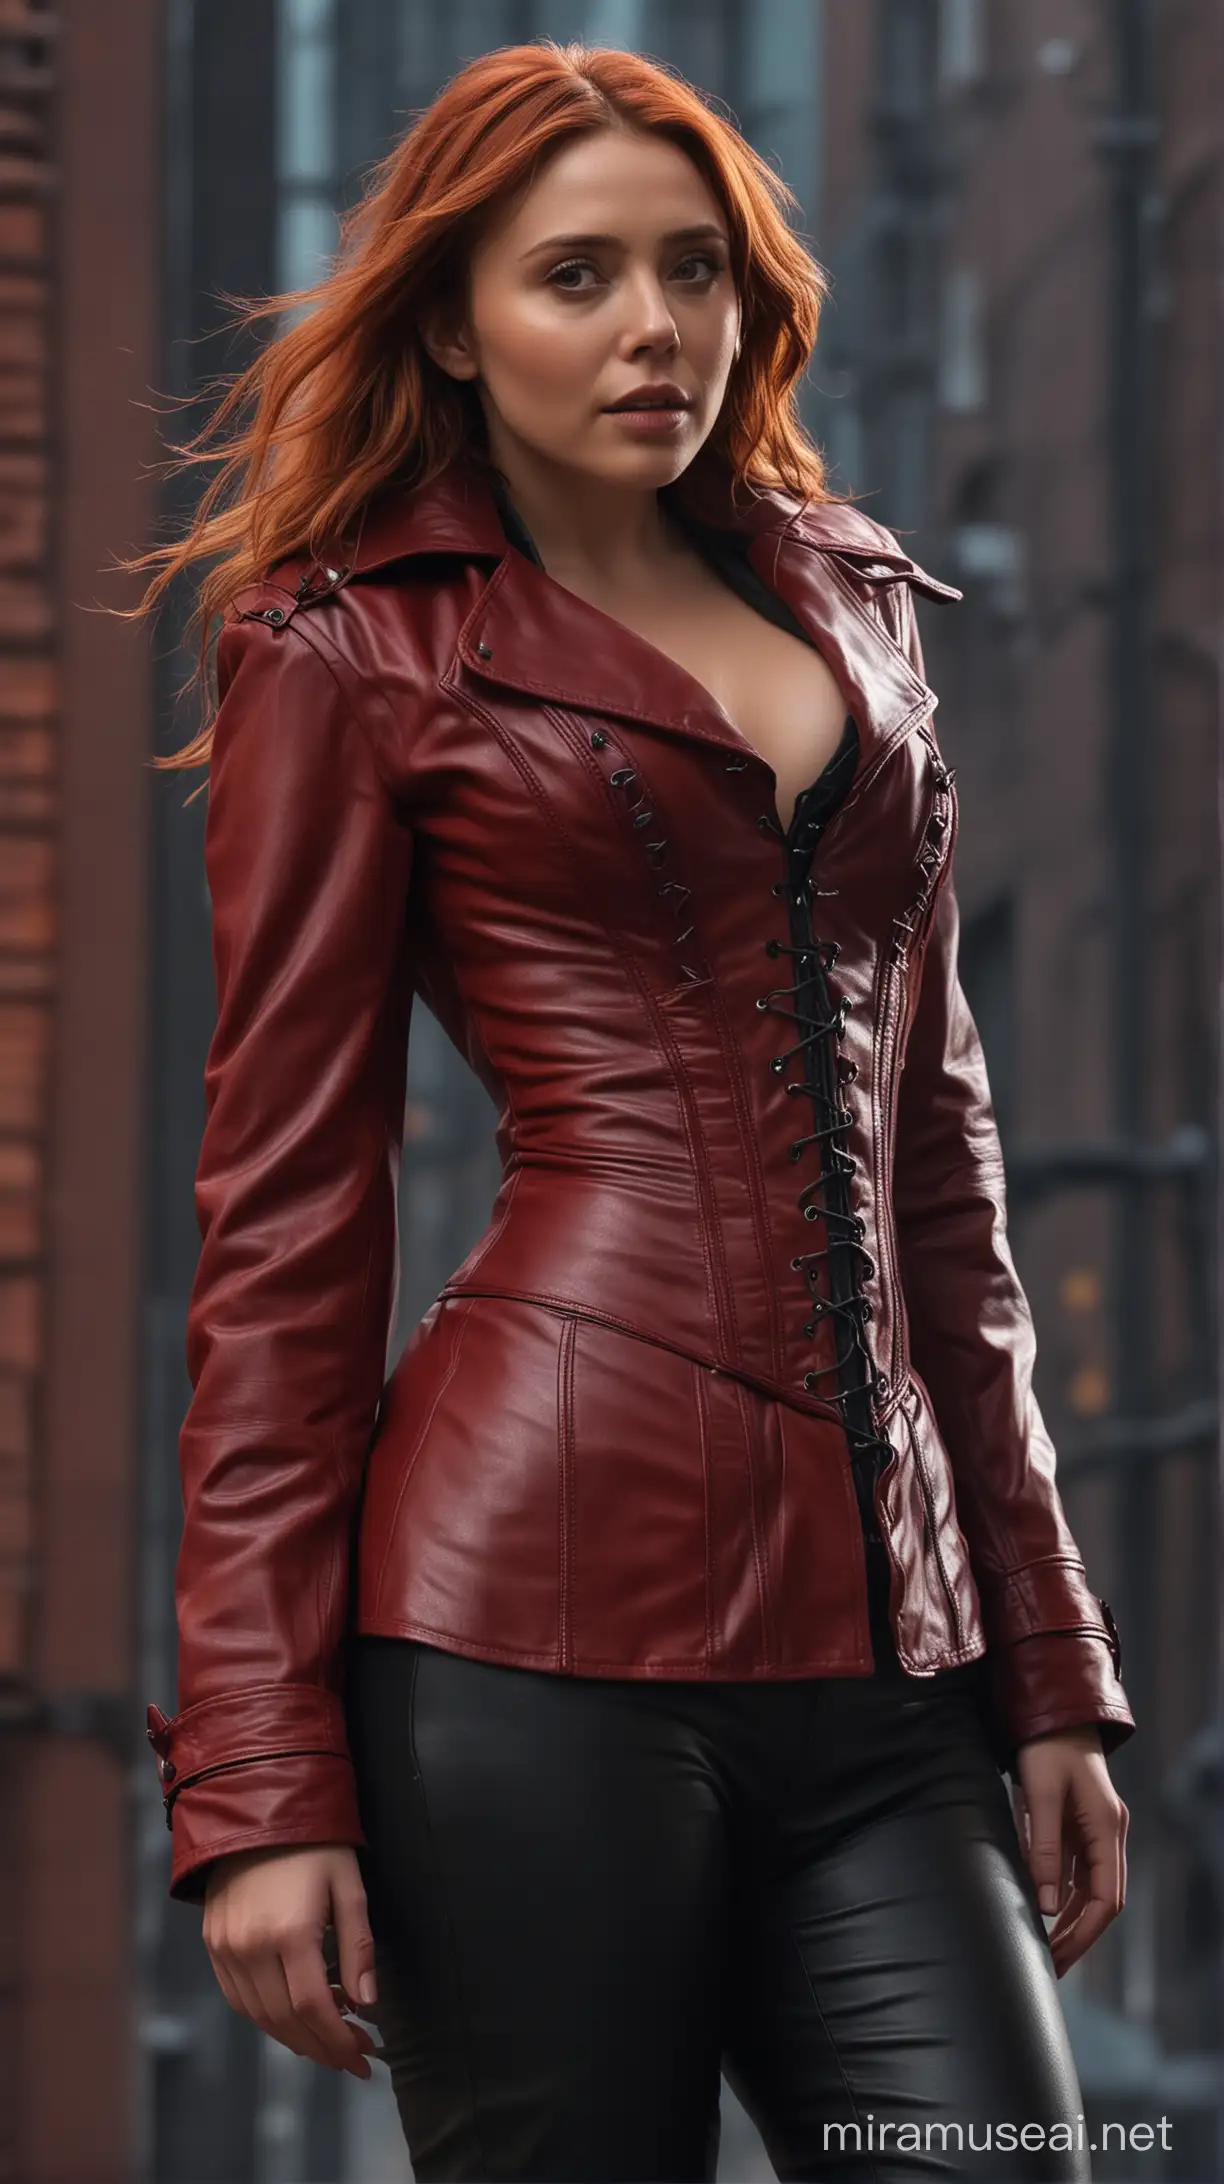 Elizabeth Olsen Portraying Intense RedHaired Heroine in Urban Cinematic Setting